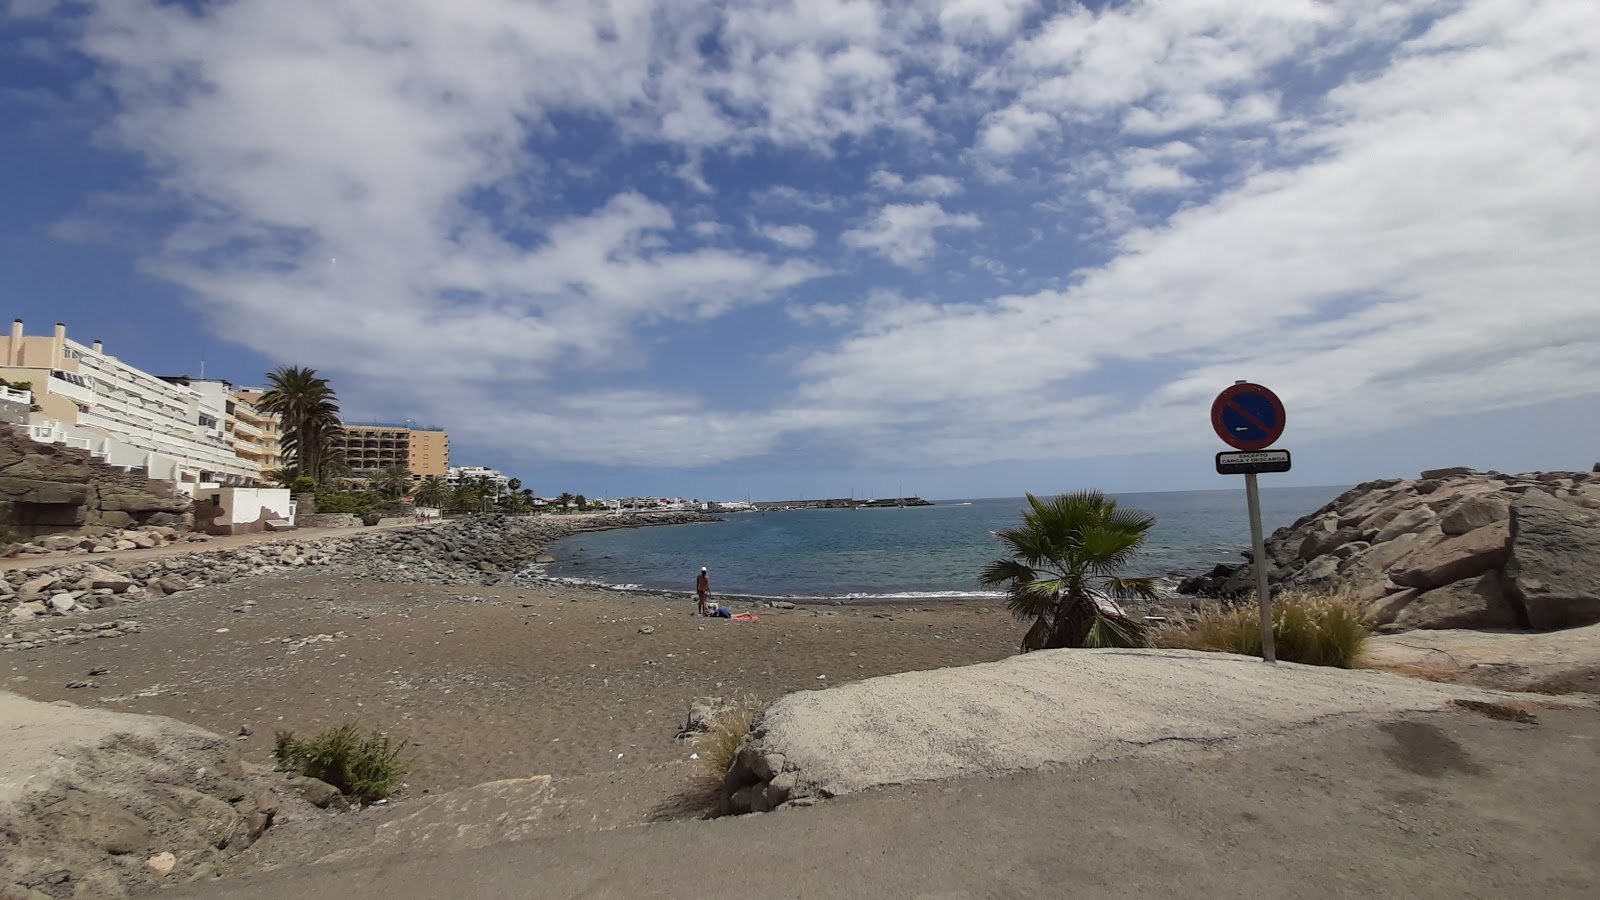 Foto di Playa La Carrera con una superficie del sabbia con ciottolame